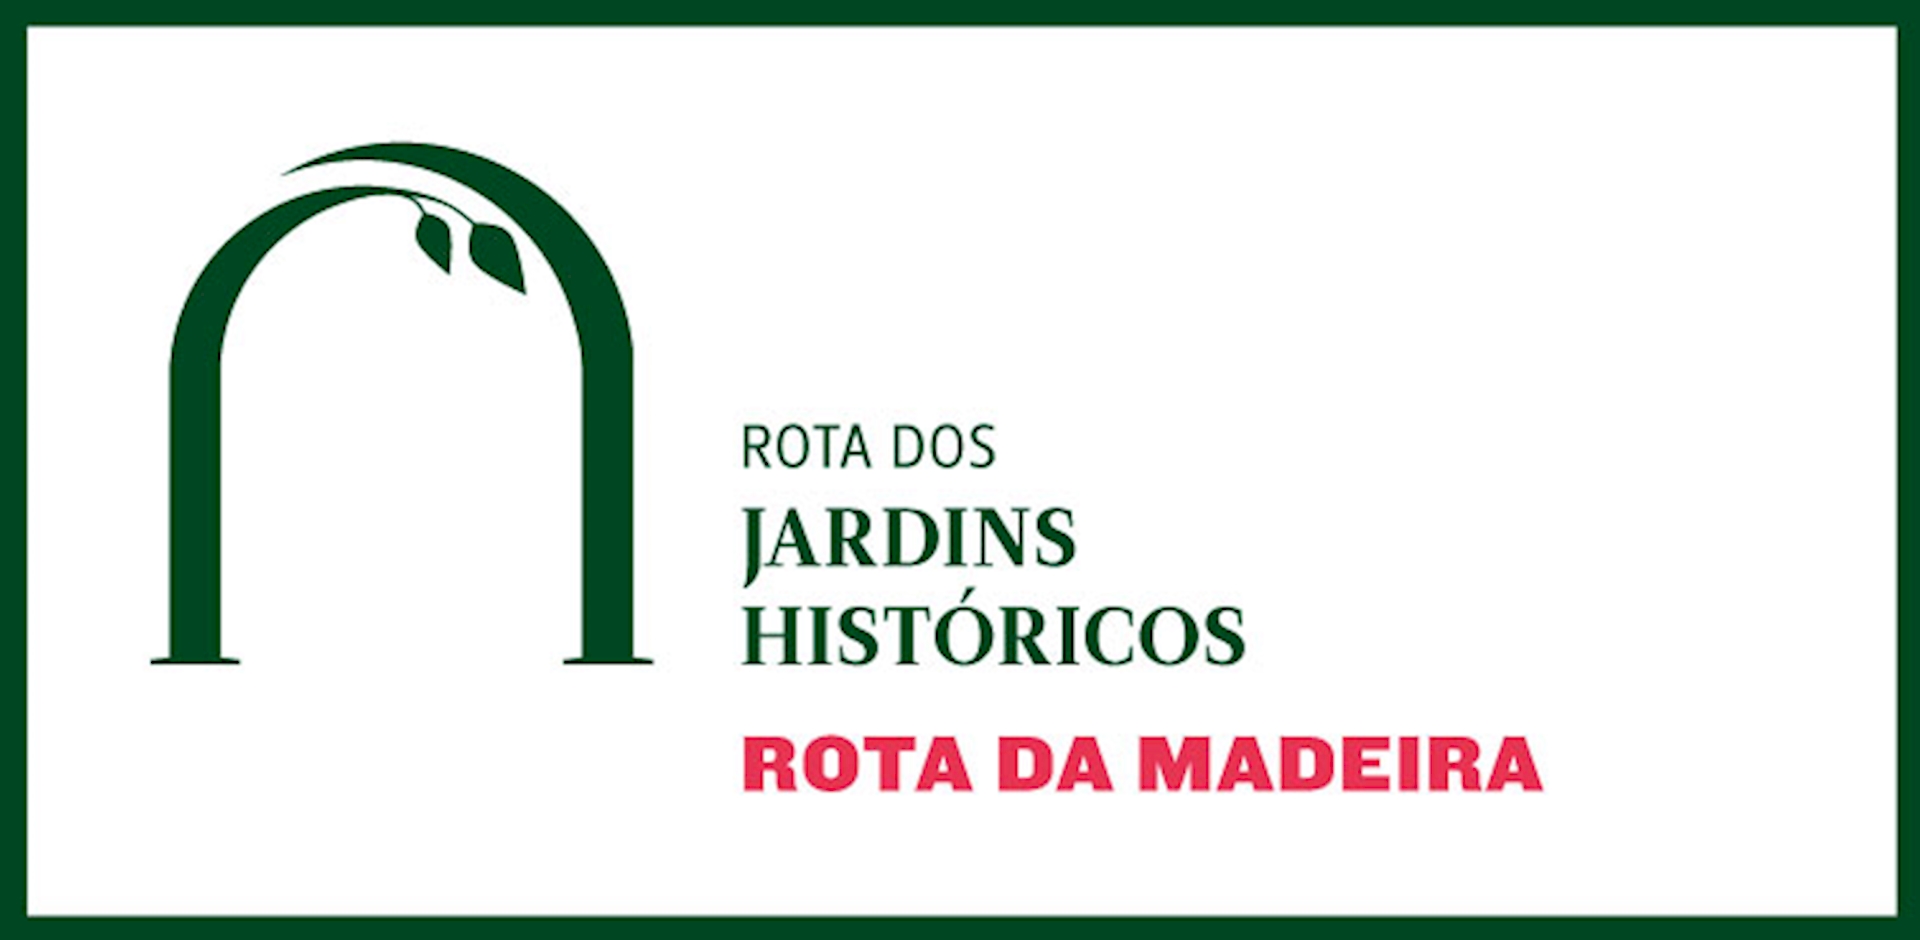 11 Route du Madeira